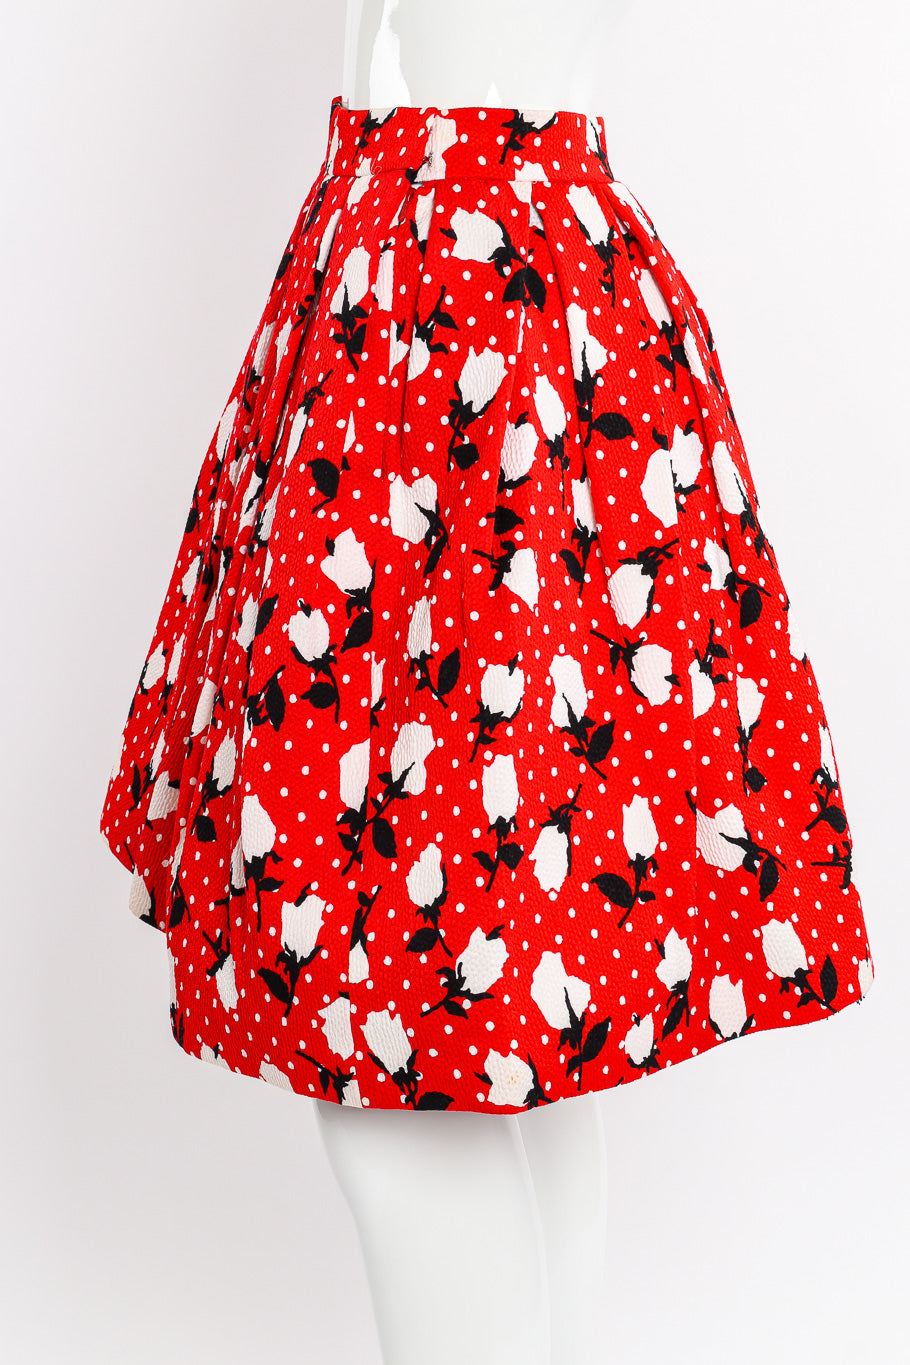 Floral dot full skirt by Christian La Croix on mannequin side @recessla